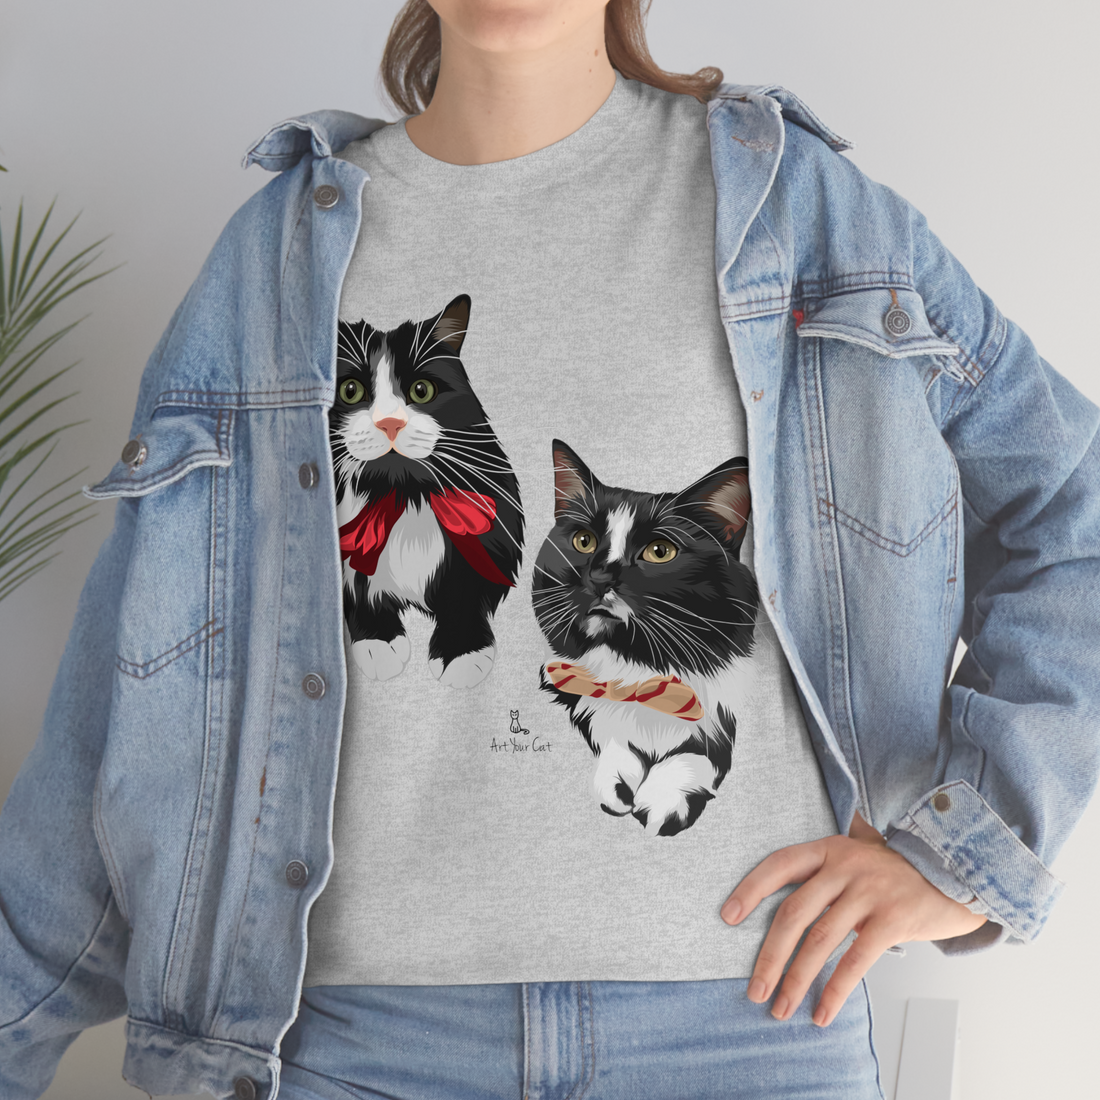 Wear Your Feline Love: Custom Cat Print T-Shirts